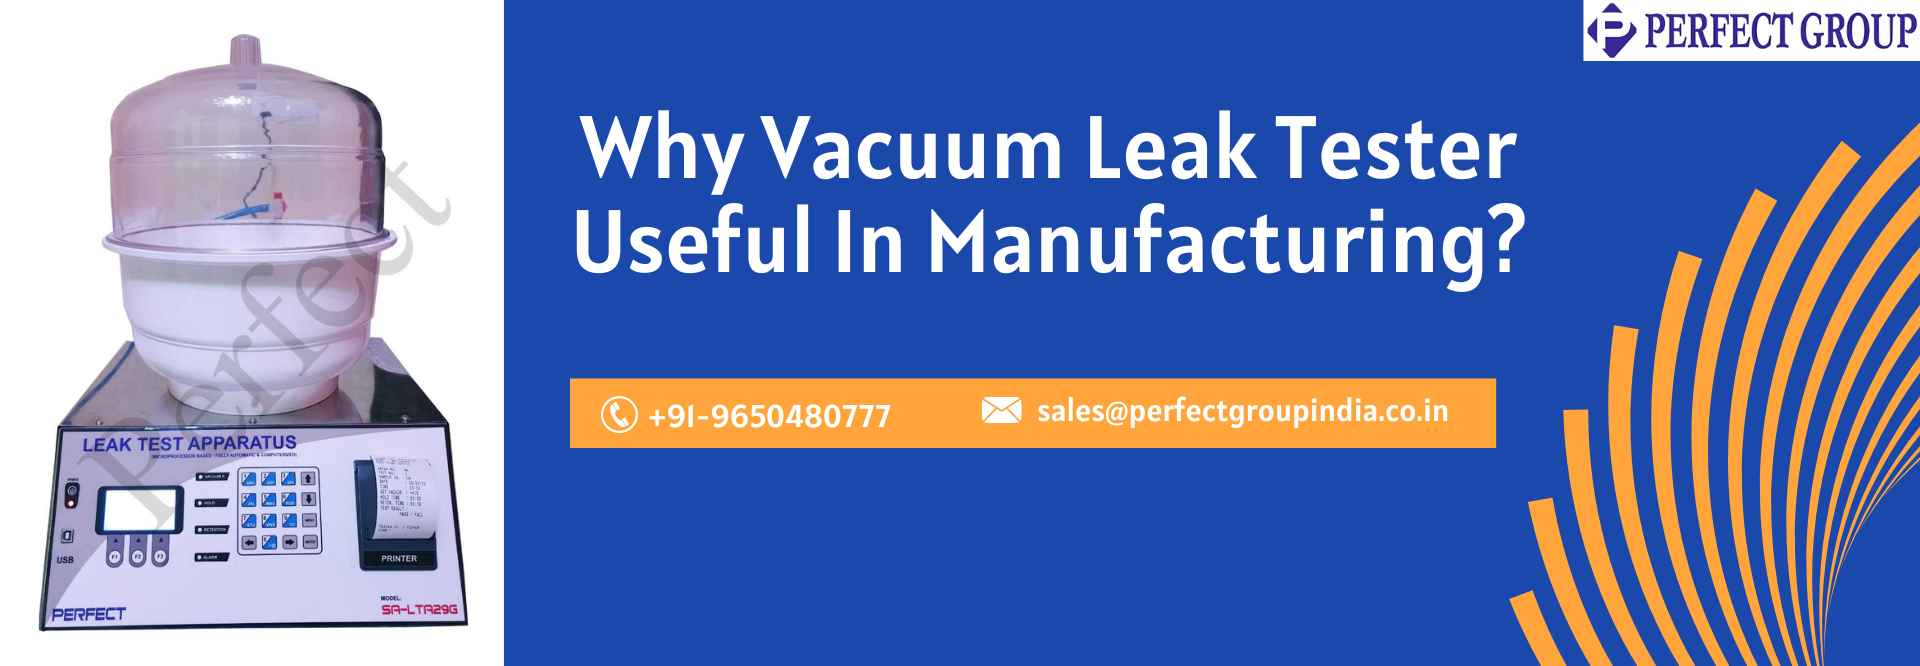 Why Vacuum Leak Tester Useful In Manufacturing?